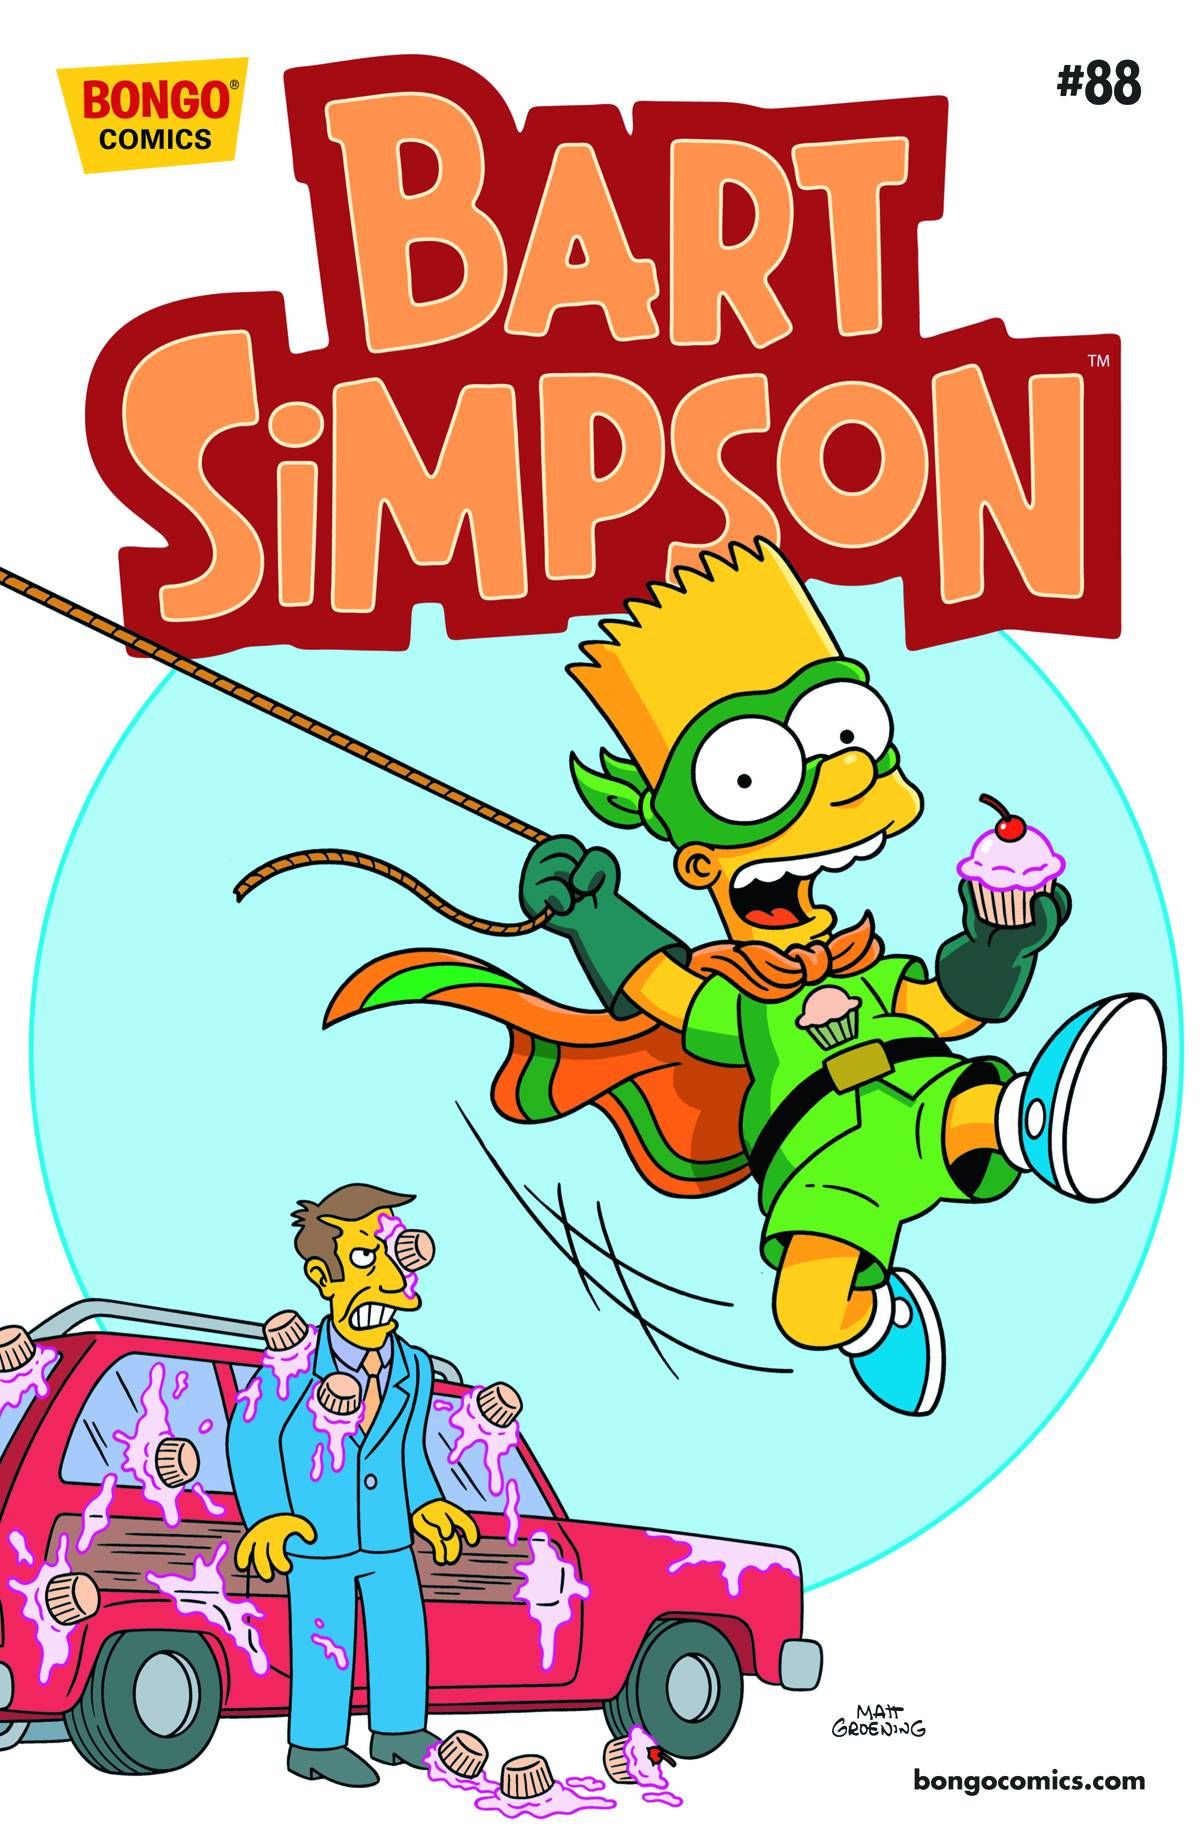 Simpsons Comics Presents Bart Simpson #88 Comic